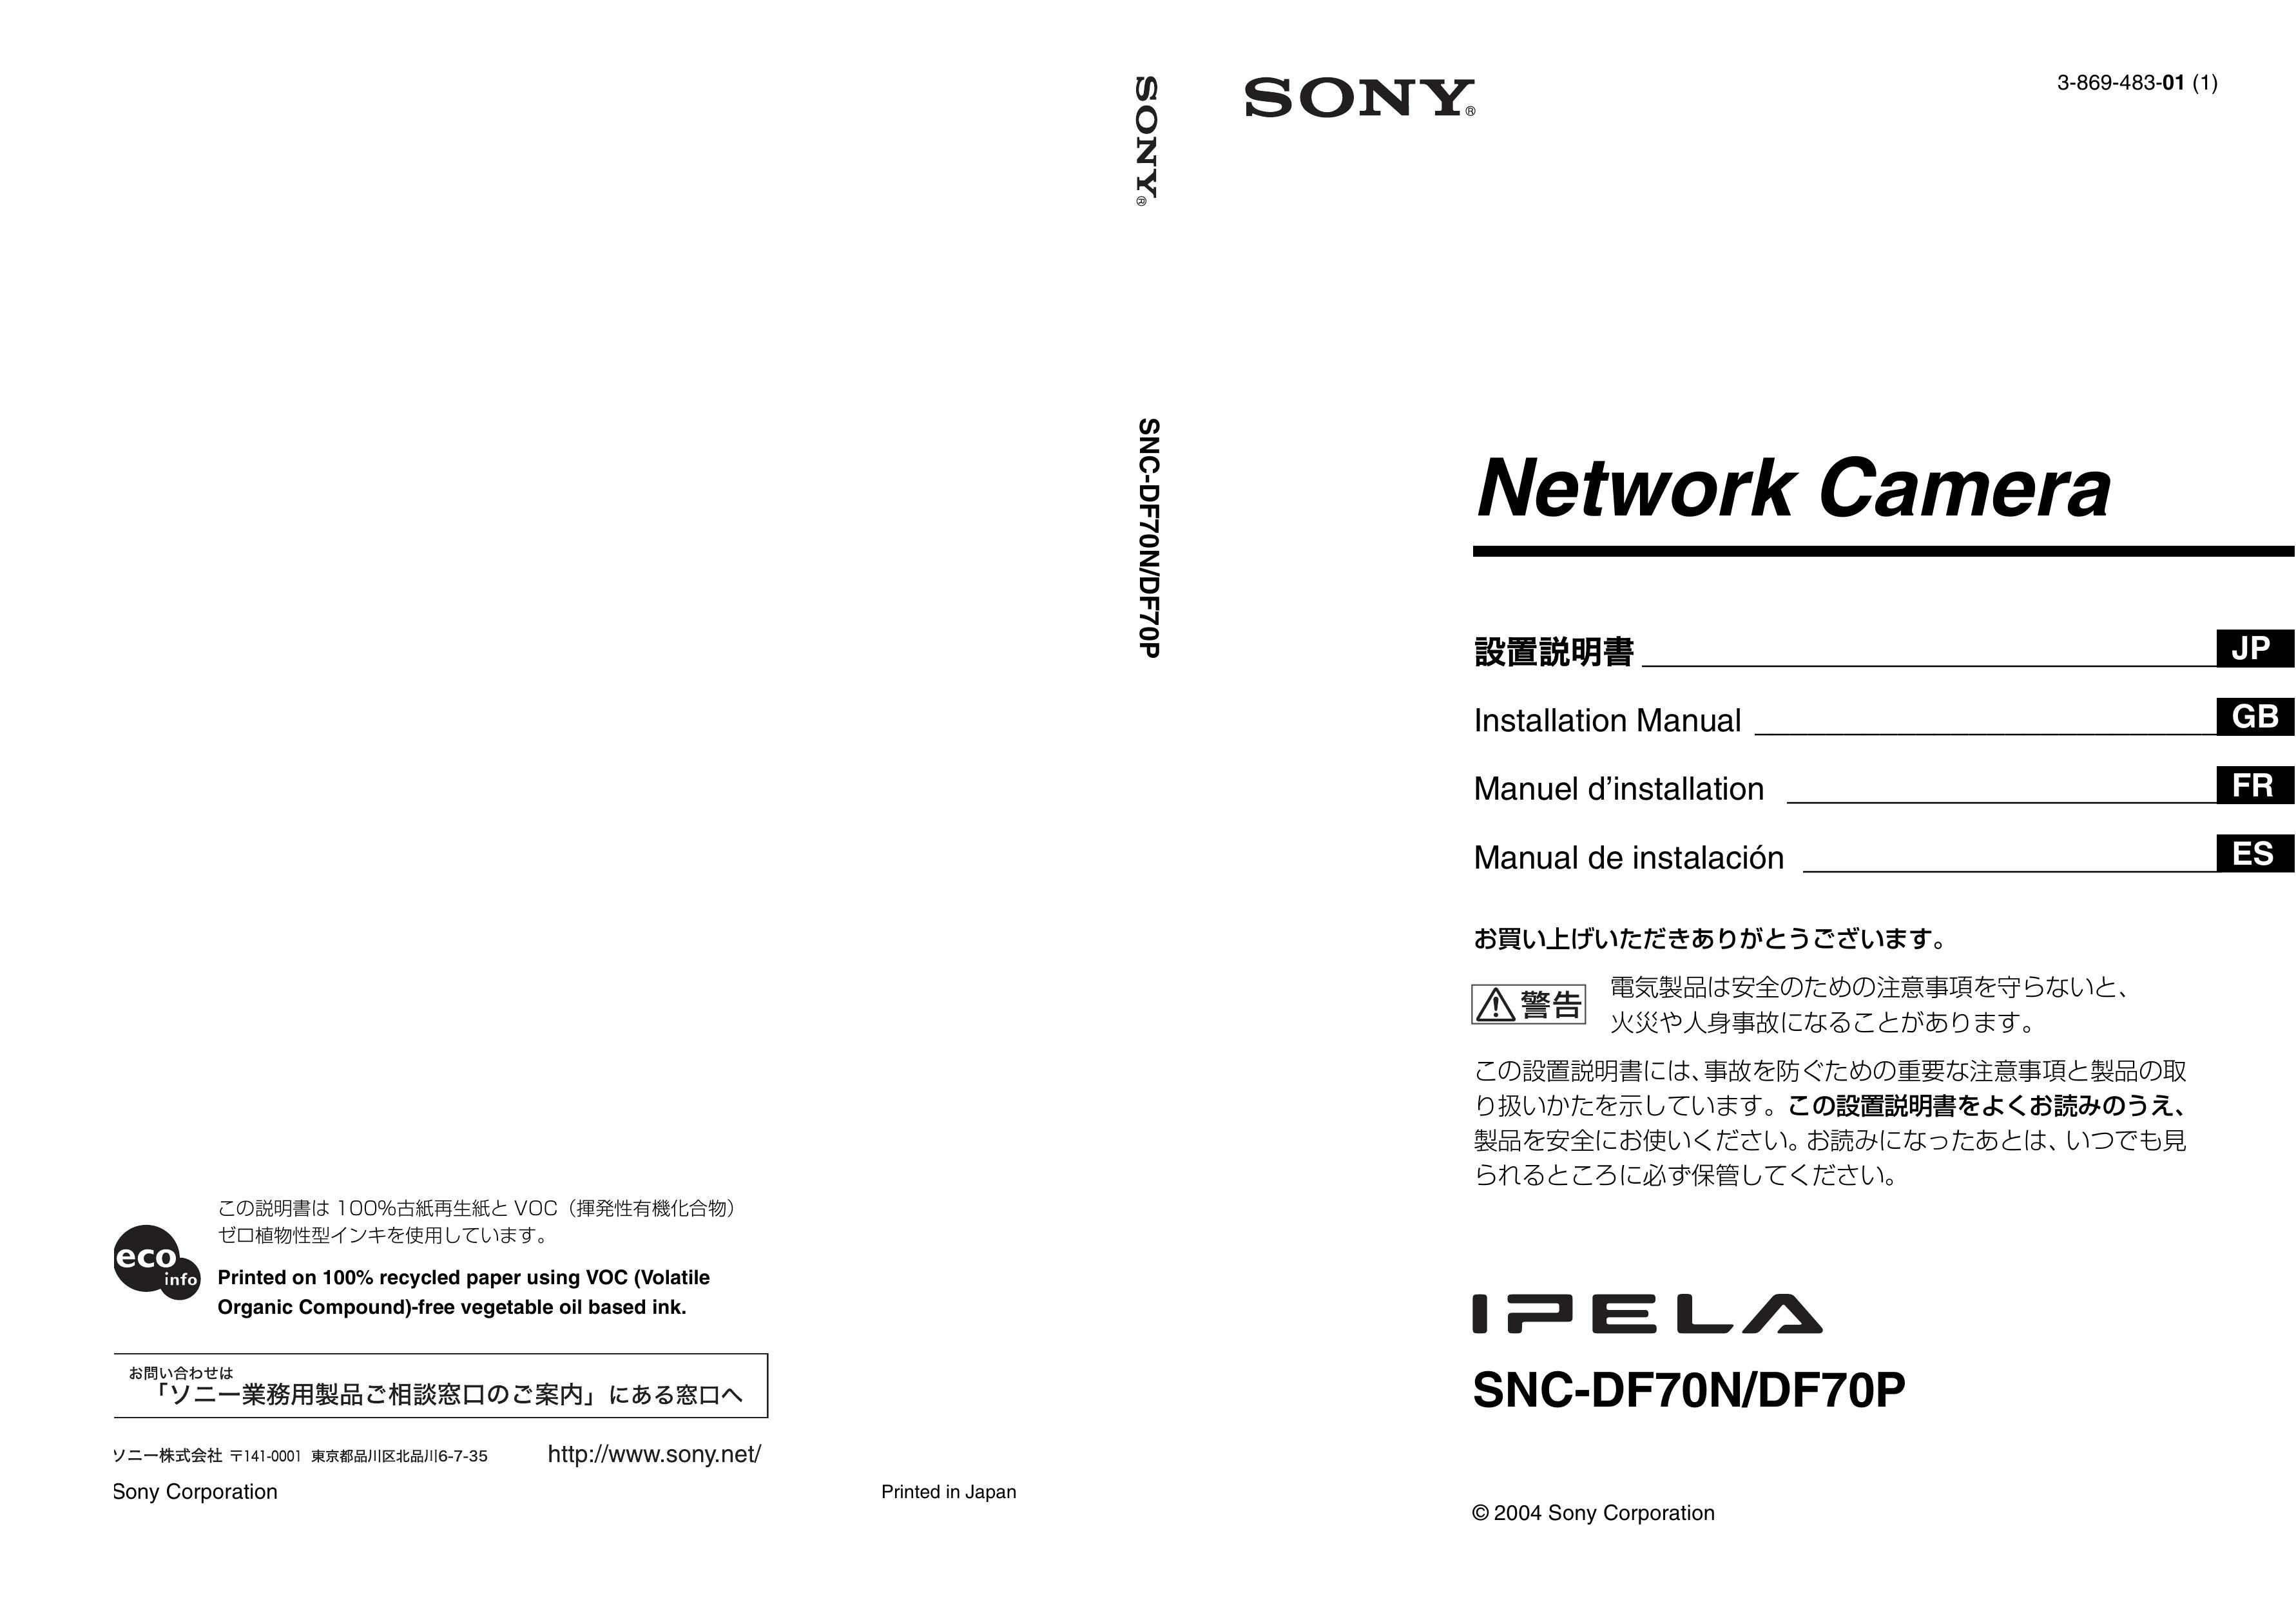 Sony DF70P Security Camera User Manual